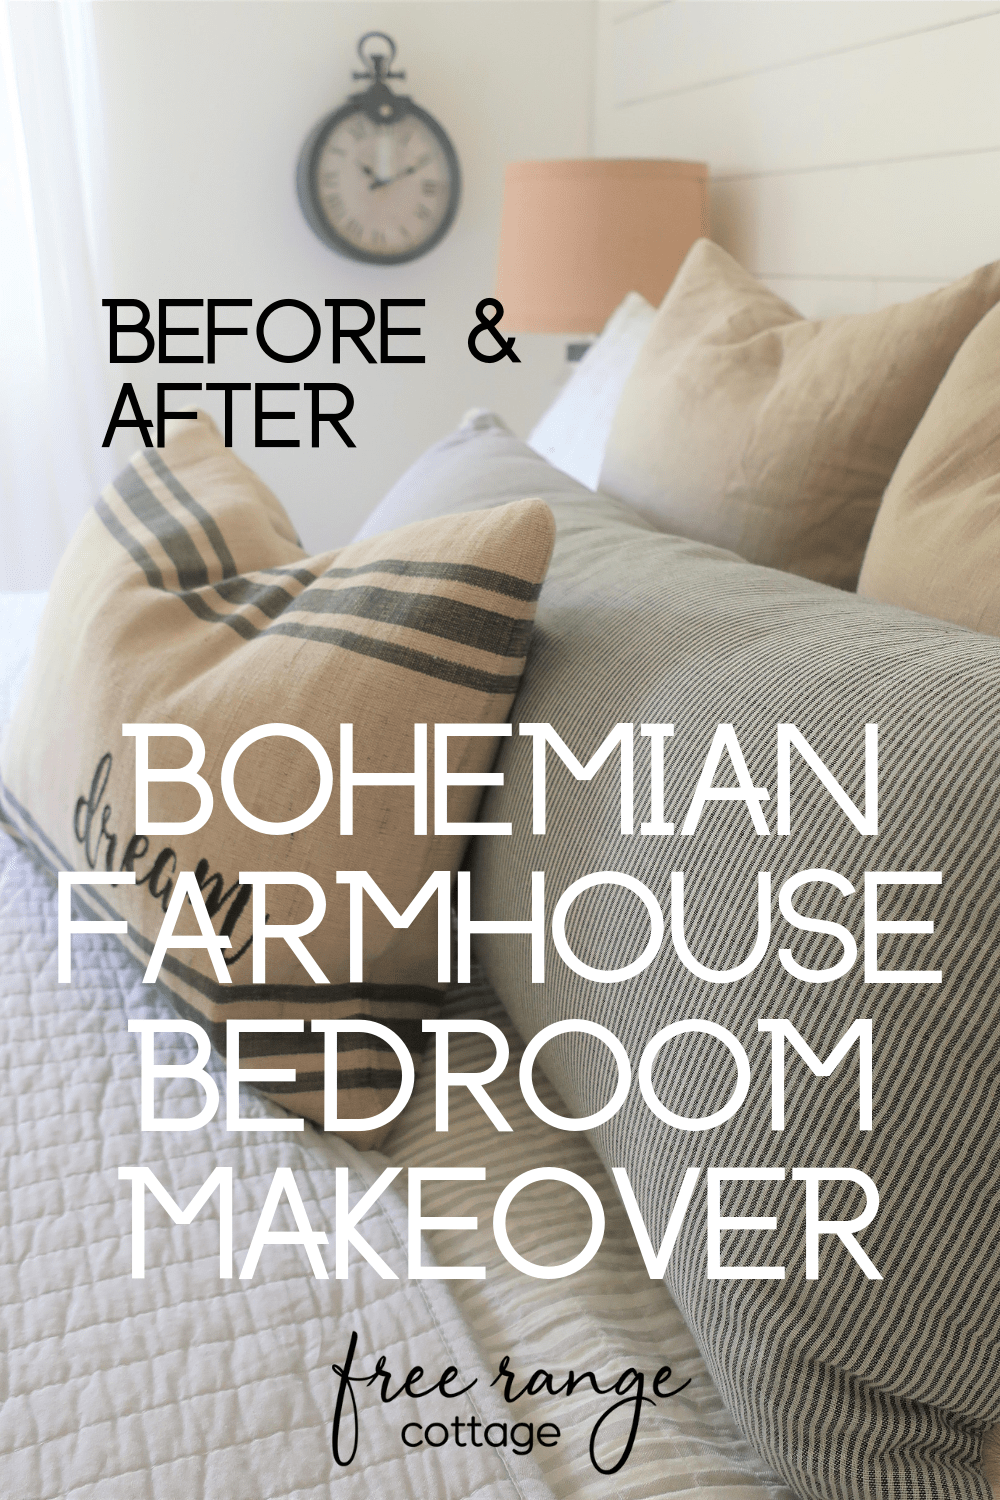 Bohemian farmhouse bedroom makever